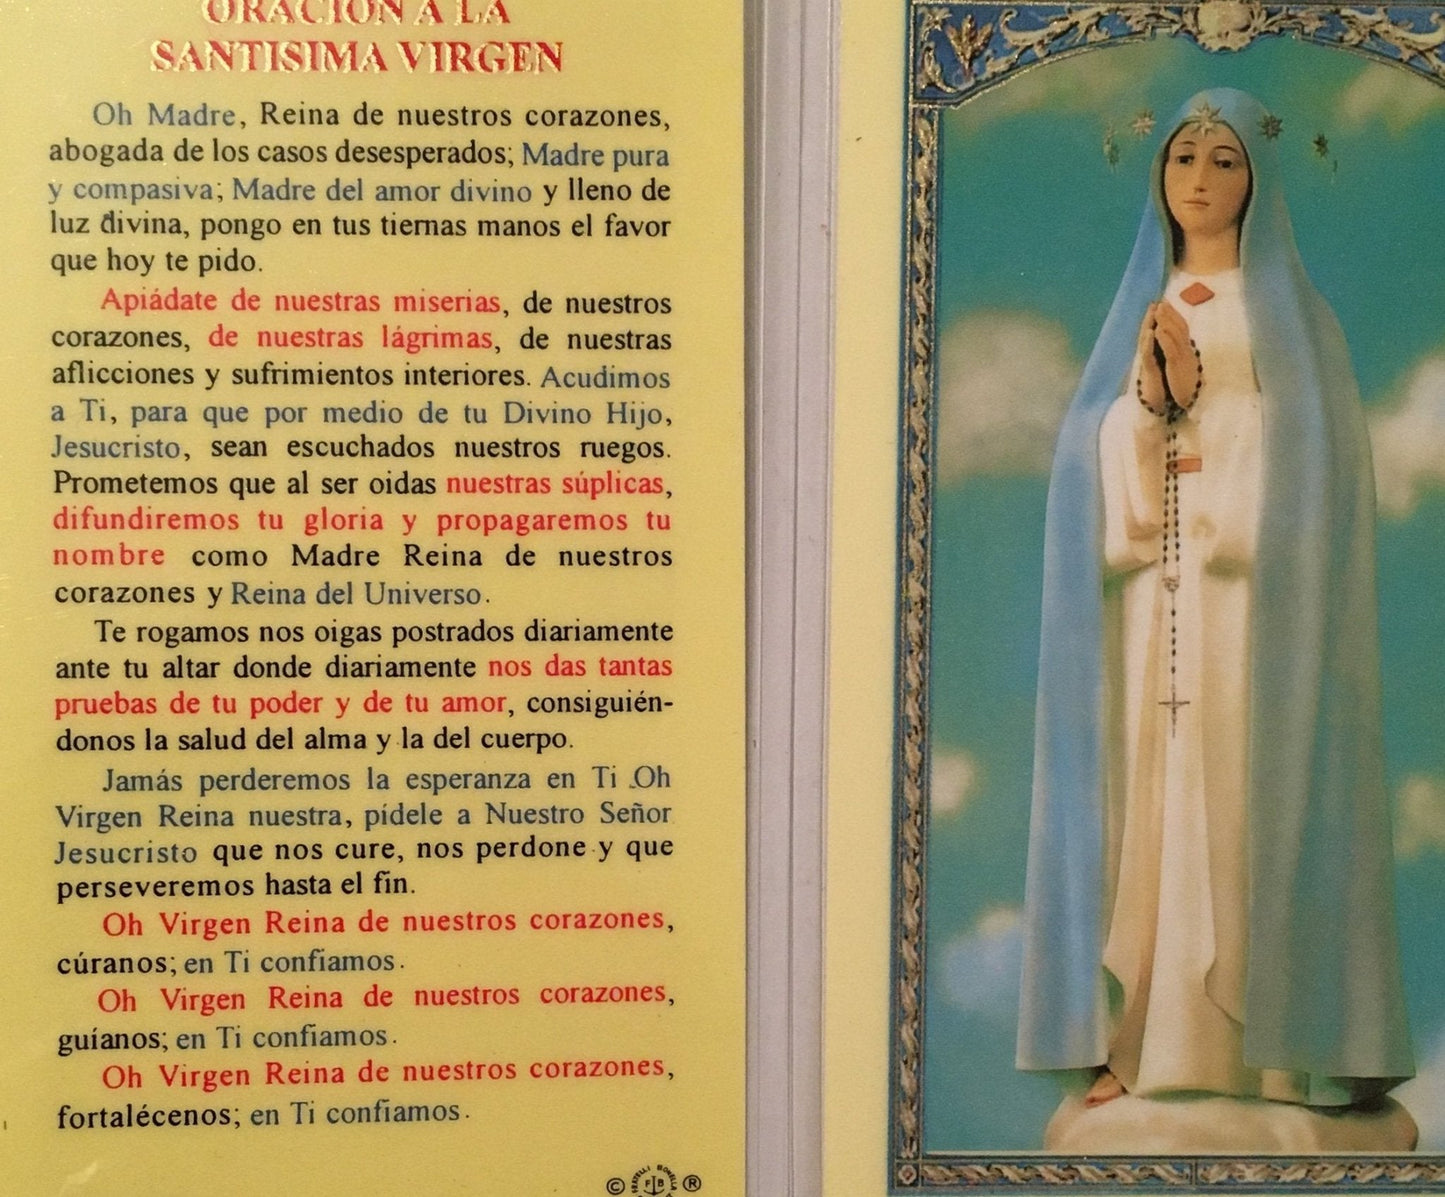 Prayer Card Oracion A La Santisima Virgen SPANISH Laminated 700-715 - Ysleta Mission Gift Shop- VOTED El Paso's Best Gift Shop